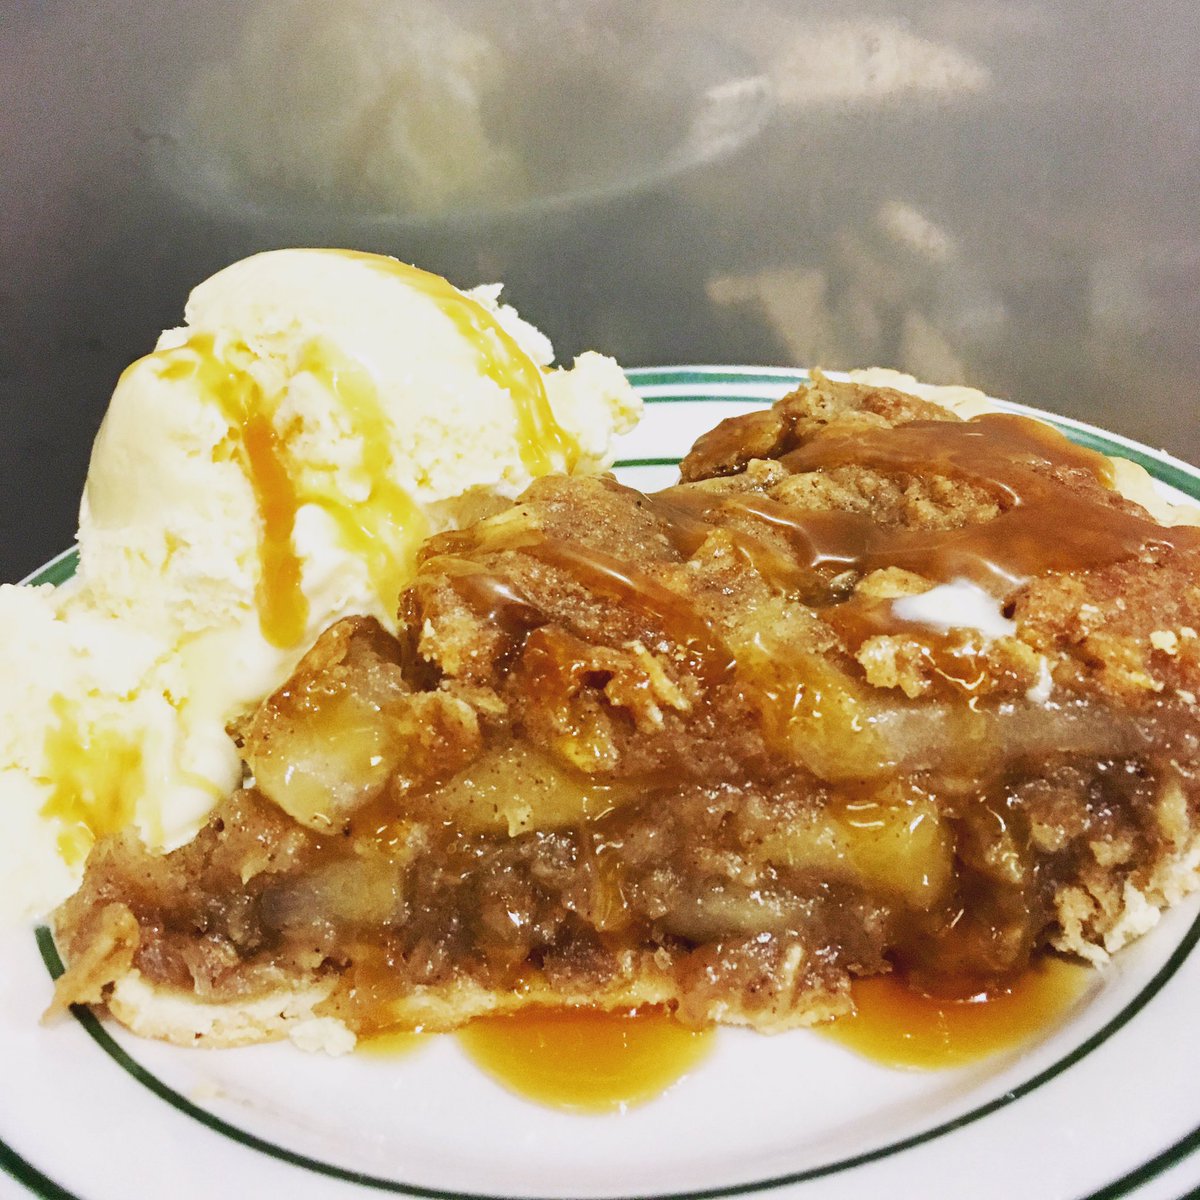 Caramel Apple pie with vanilla ice cream. 😋
#newmangrove #yum #caramelapplepie